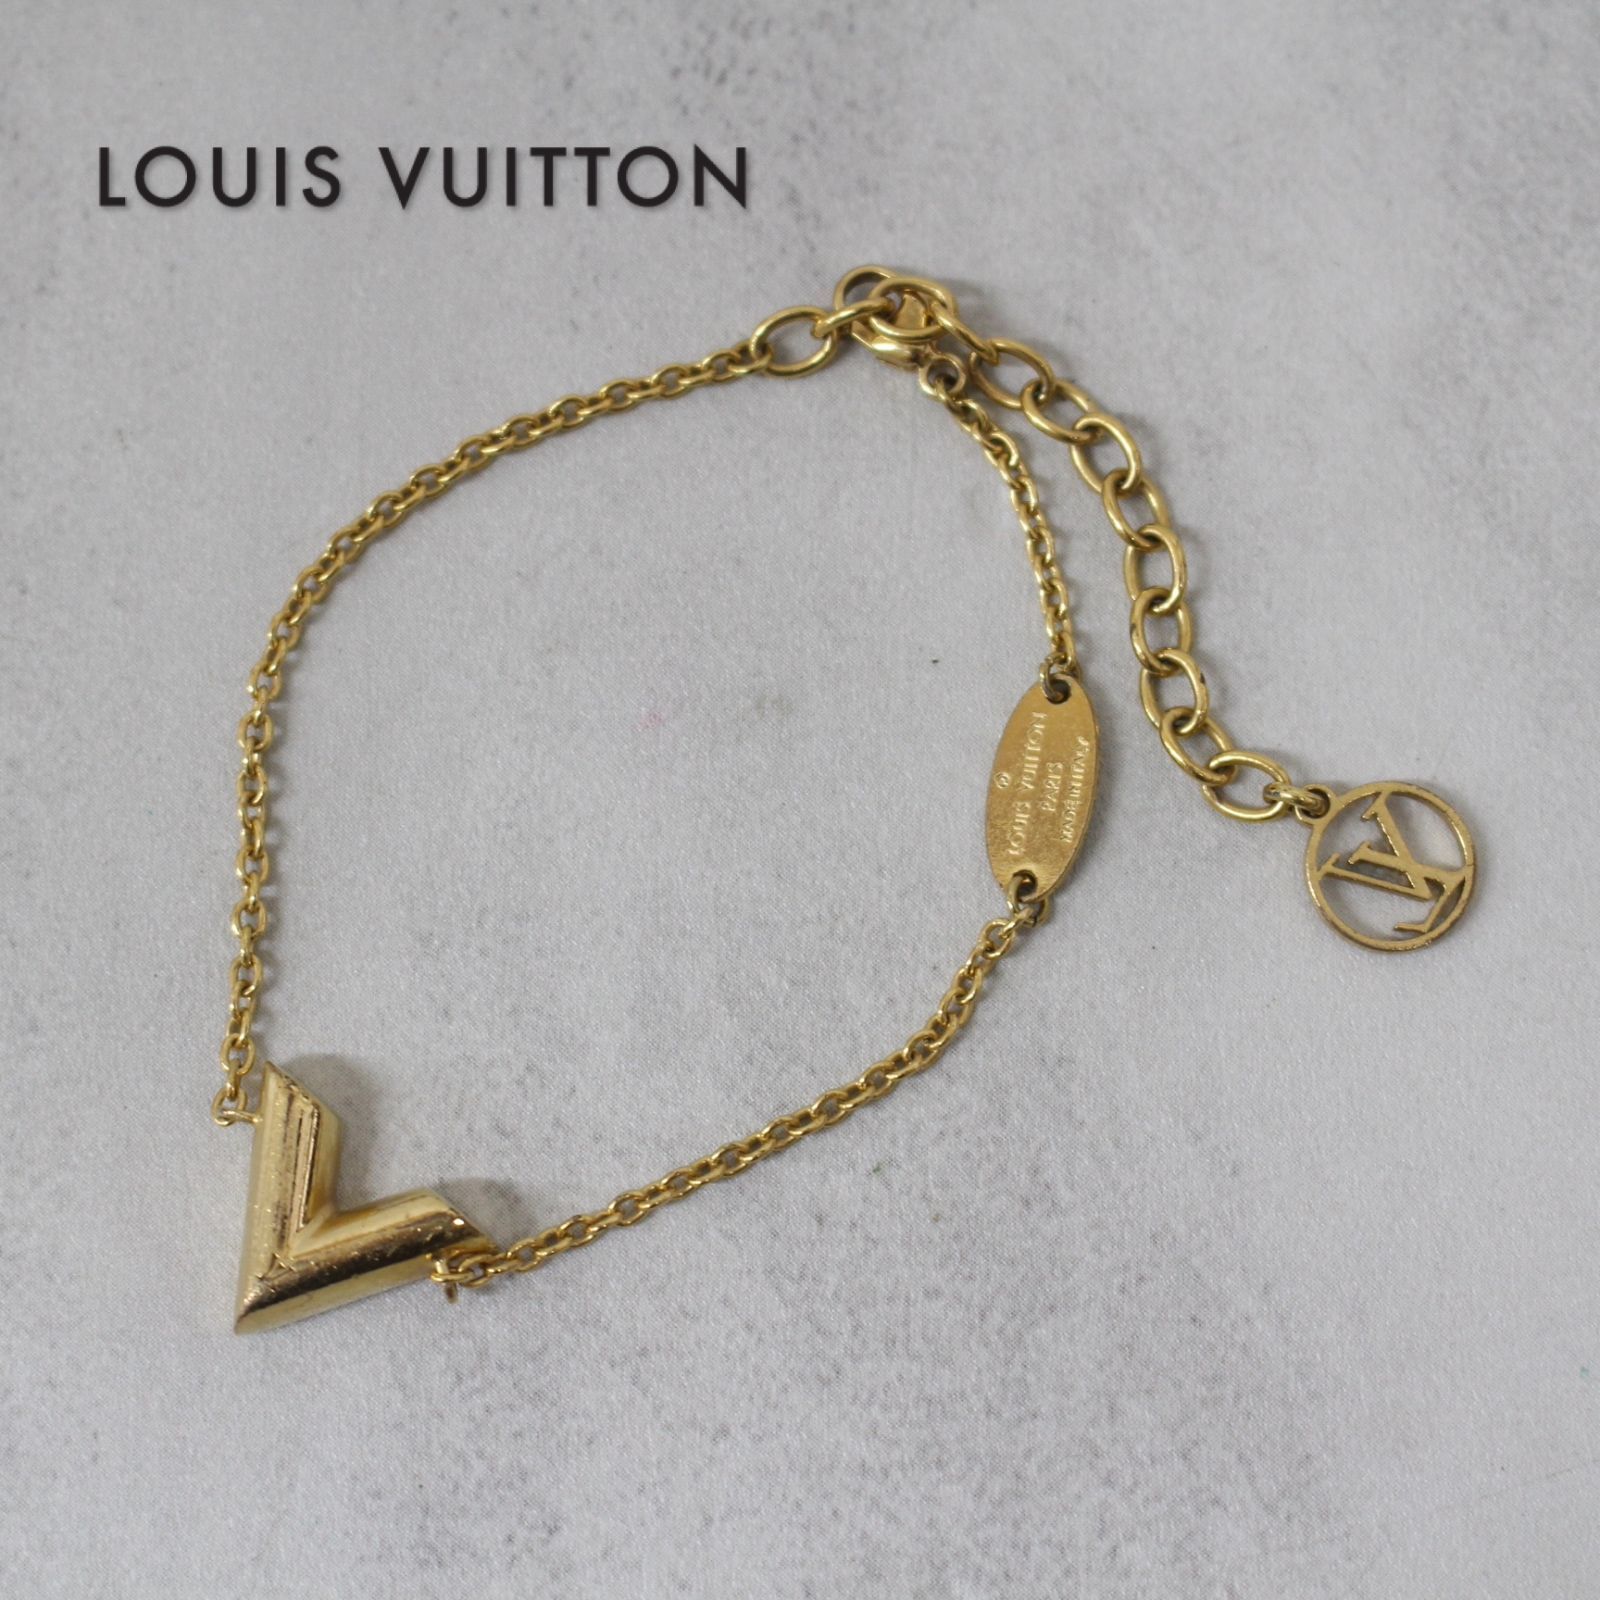 Louis Vuittonプレスレット